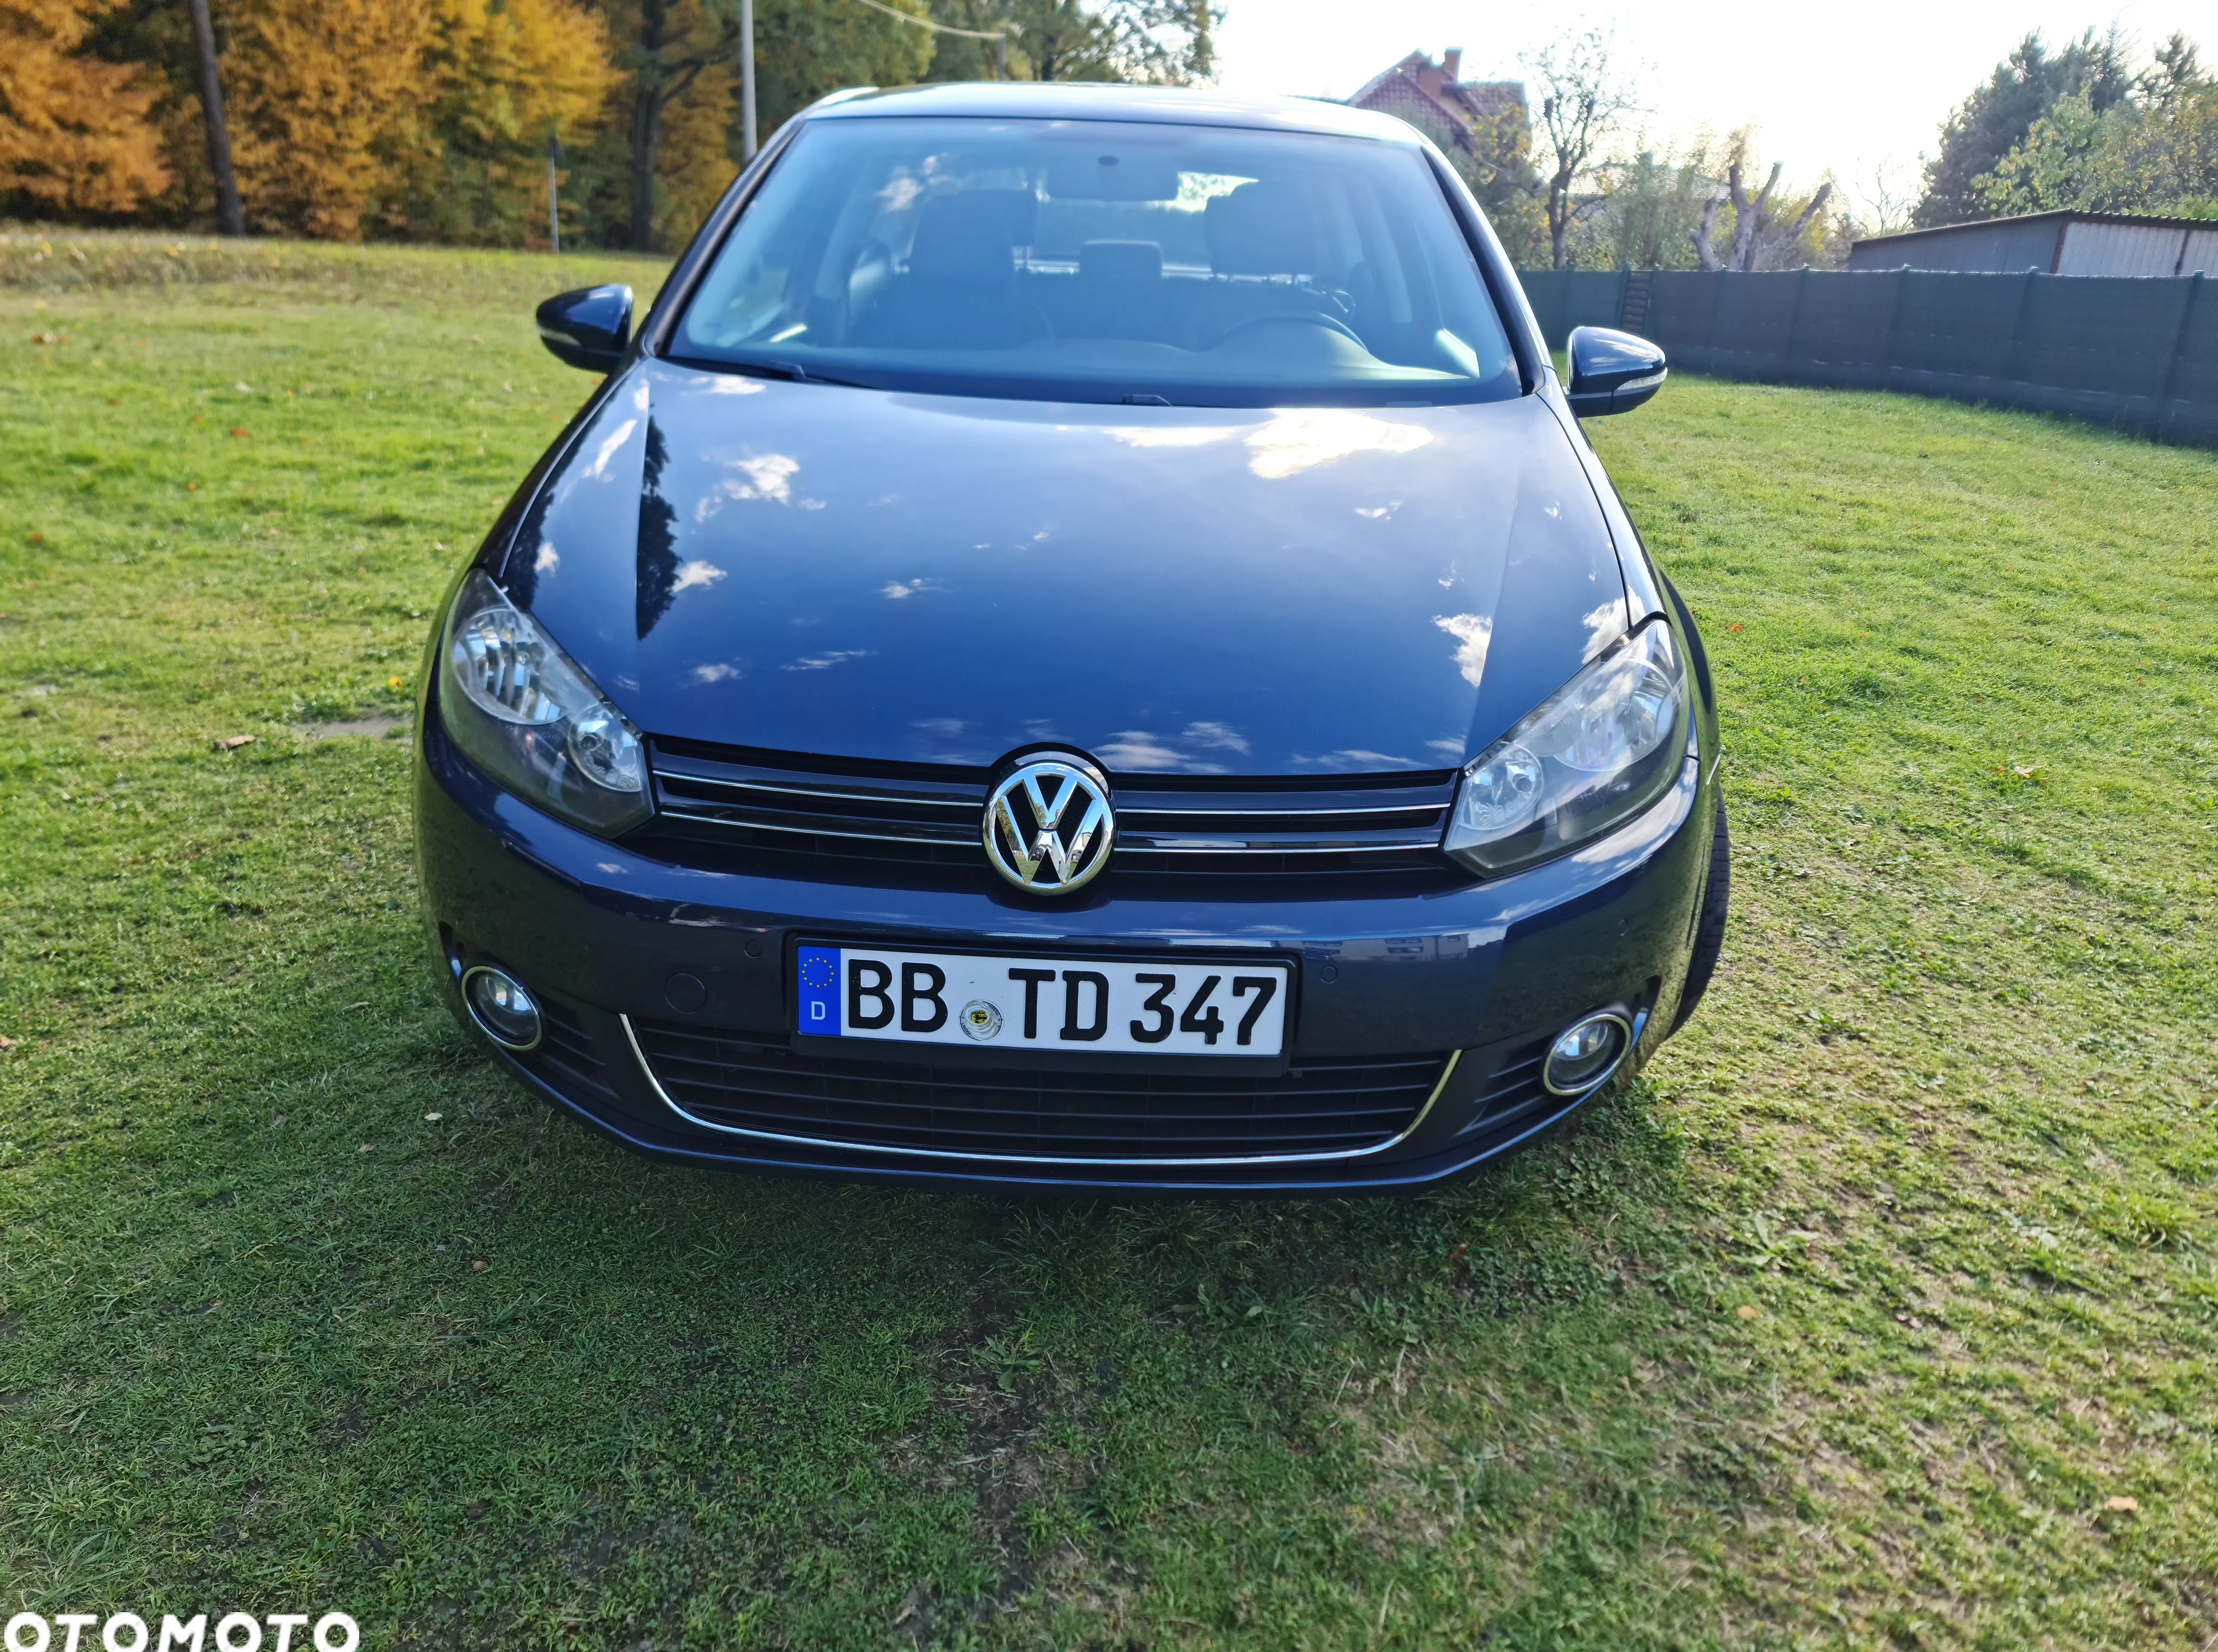 volkswagen golf Volkswagen Golf cena 19900 przebieg: 171856, rok produkcji 2009 z Rybnik